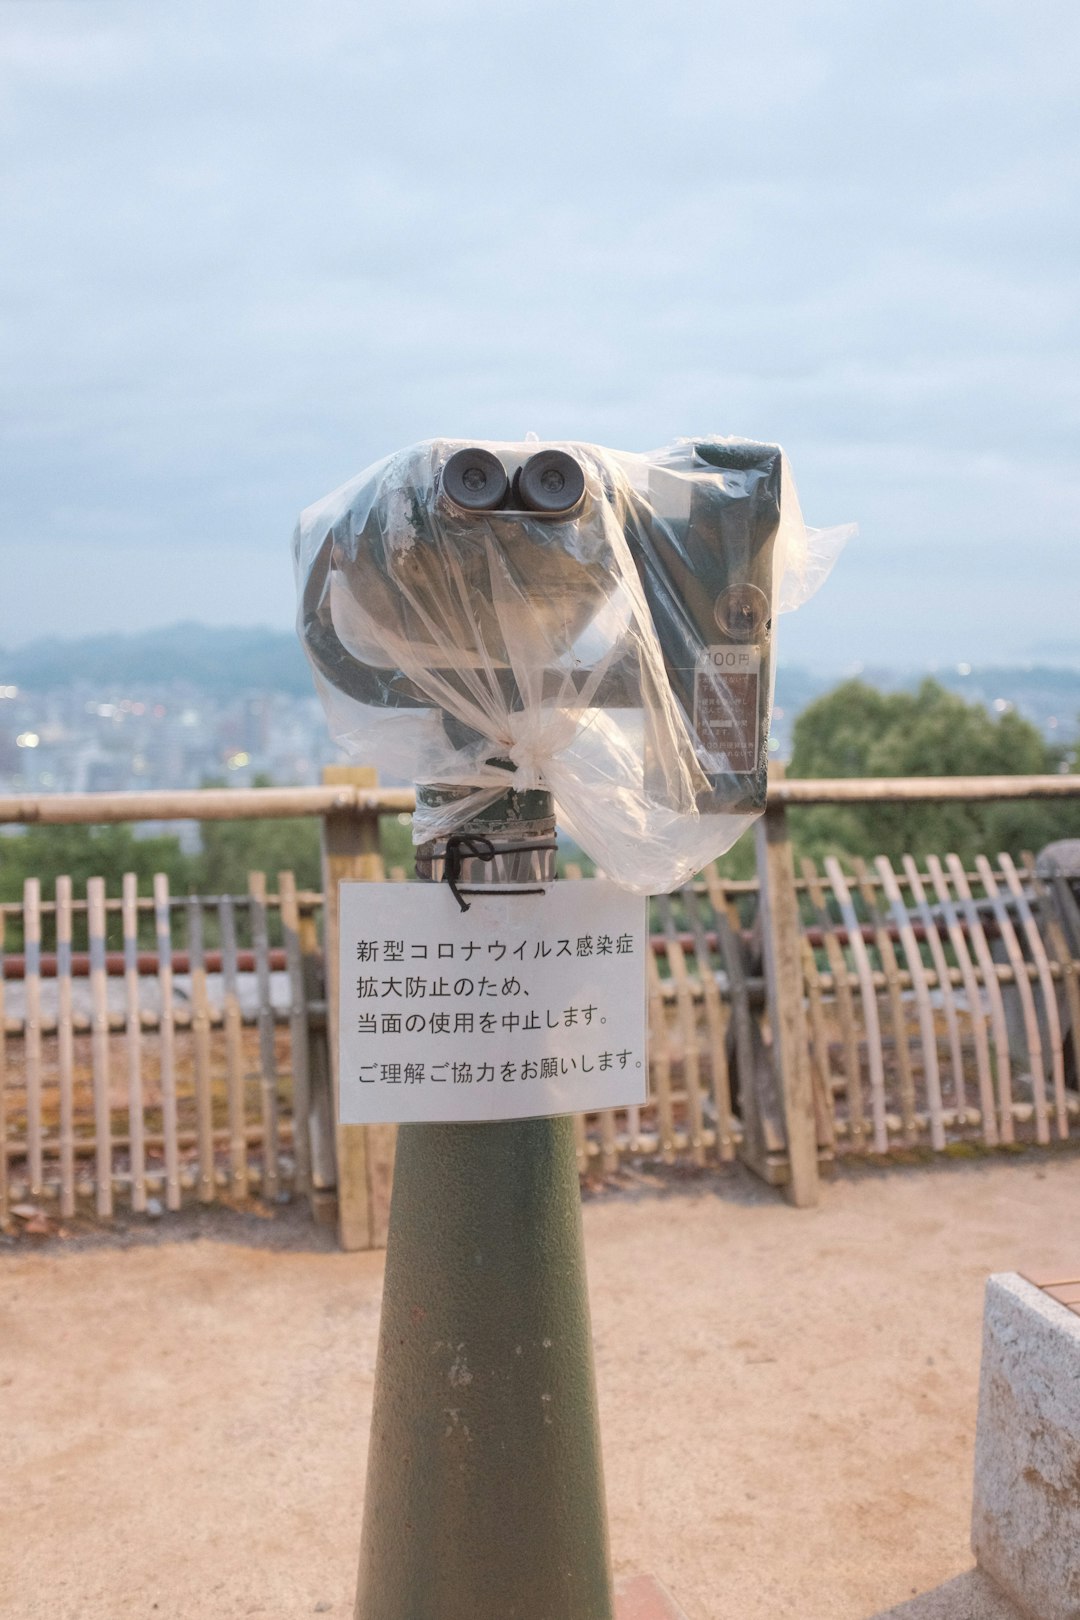 clear plastic bag on green metal post